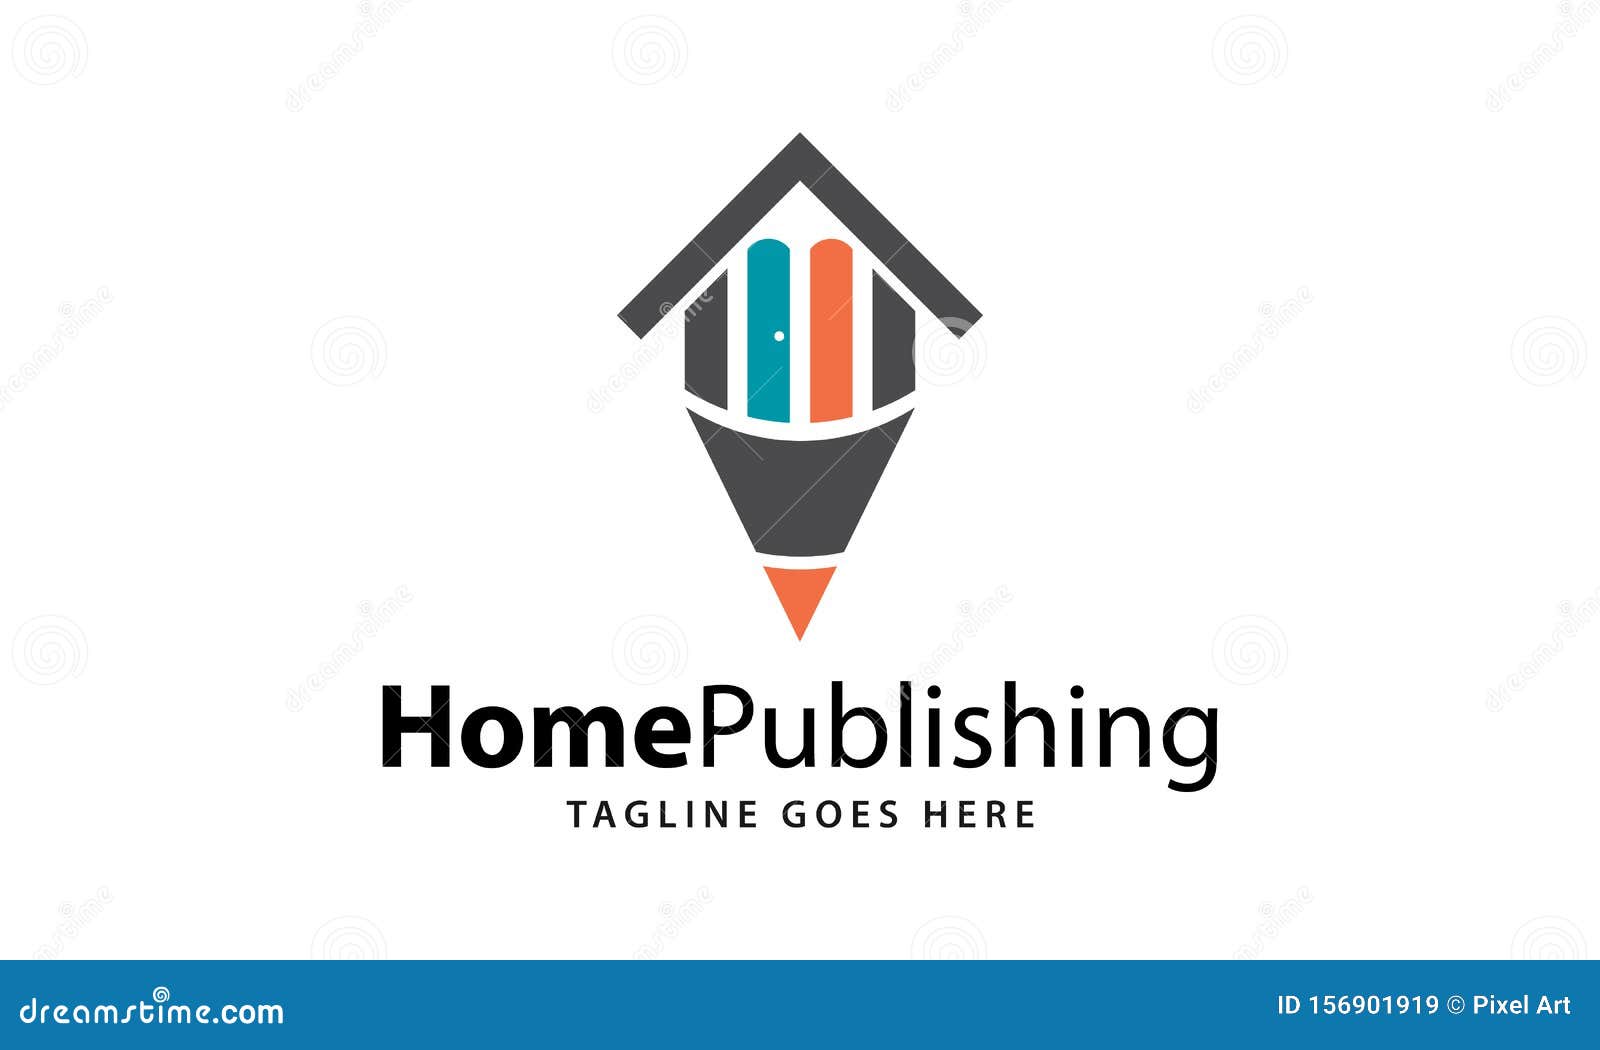  logo template for digital publishers